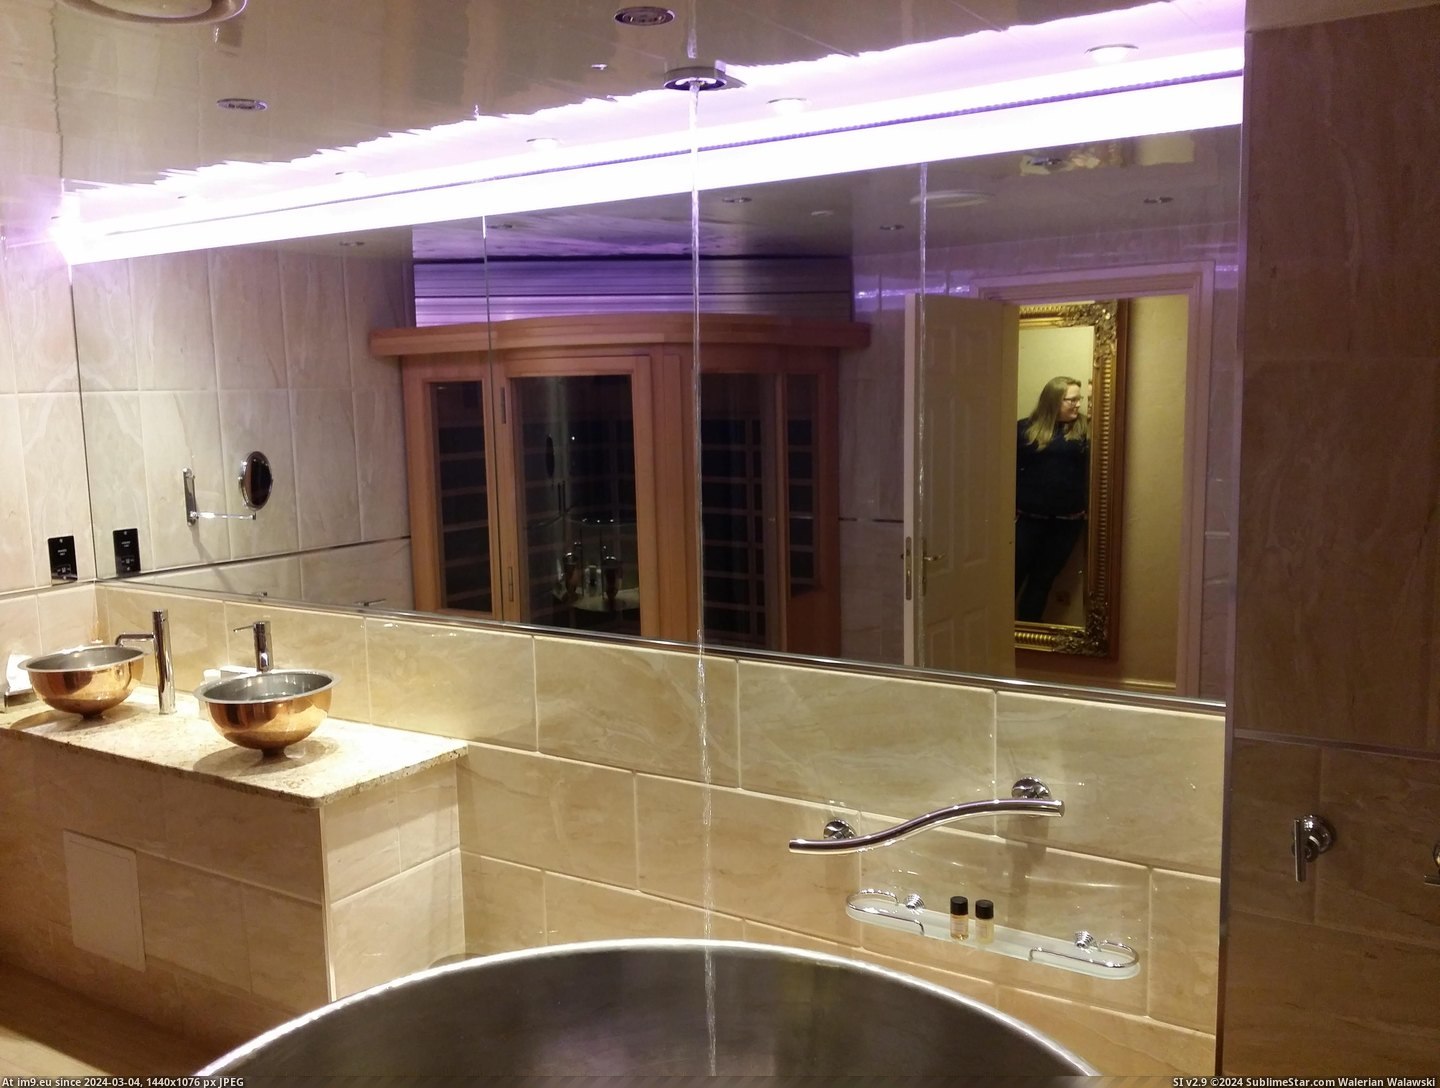 #Room #Hotel #Fills #Bath #Ceiling [Mildlyinteresting] The bath in my hotel room fills from the ceiling Pic. (Изображение из альбом My r/MILDLYINTERESTING favs))